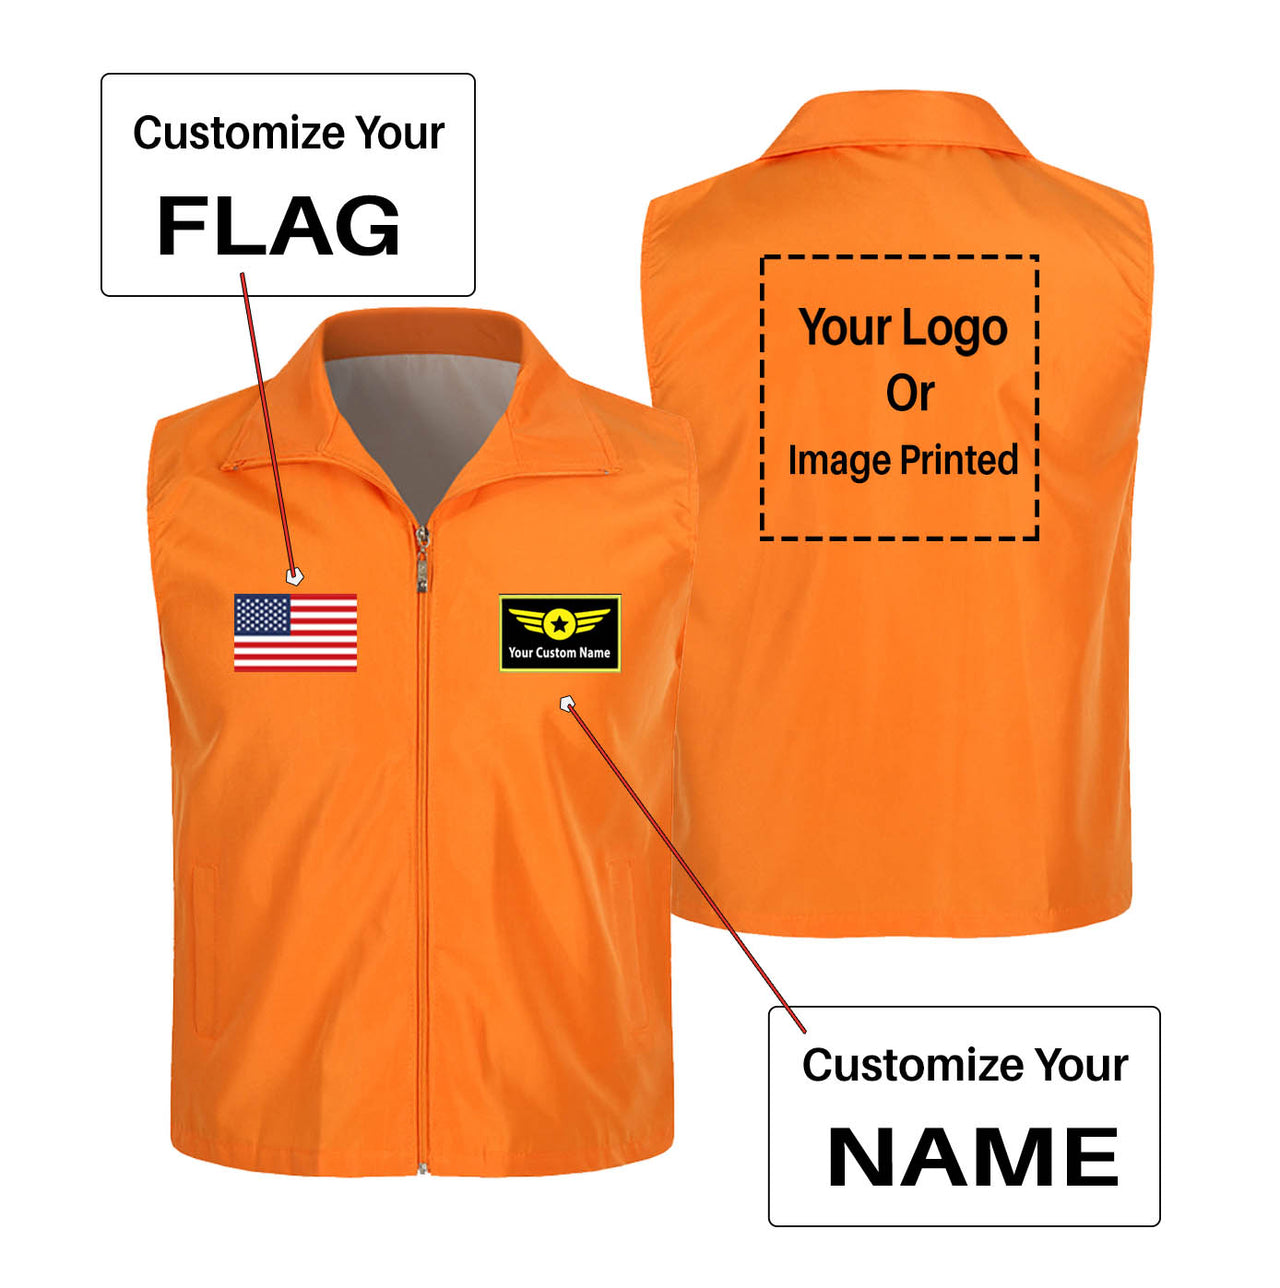 Custom Flag & Name with LOGO Designed Thin Style Vests